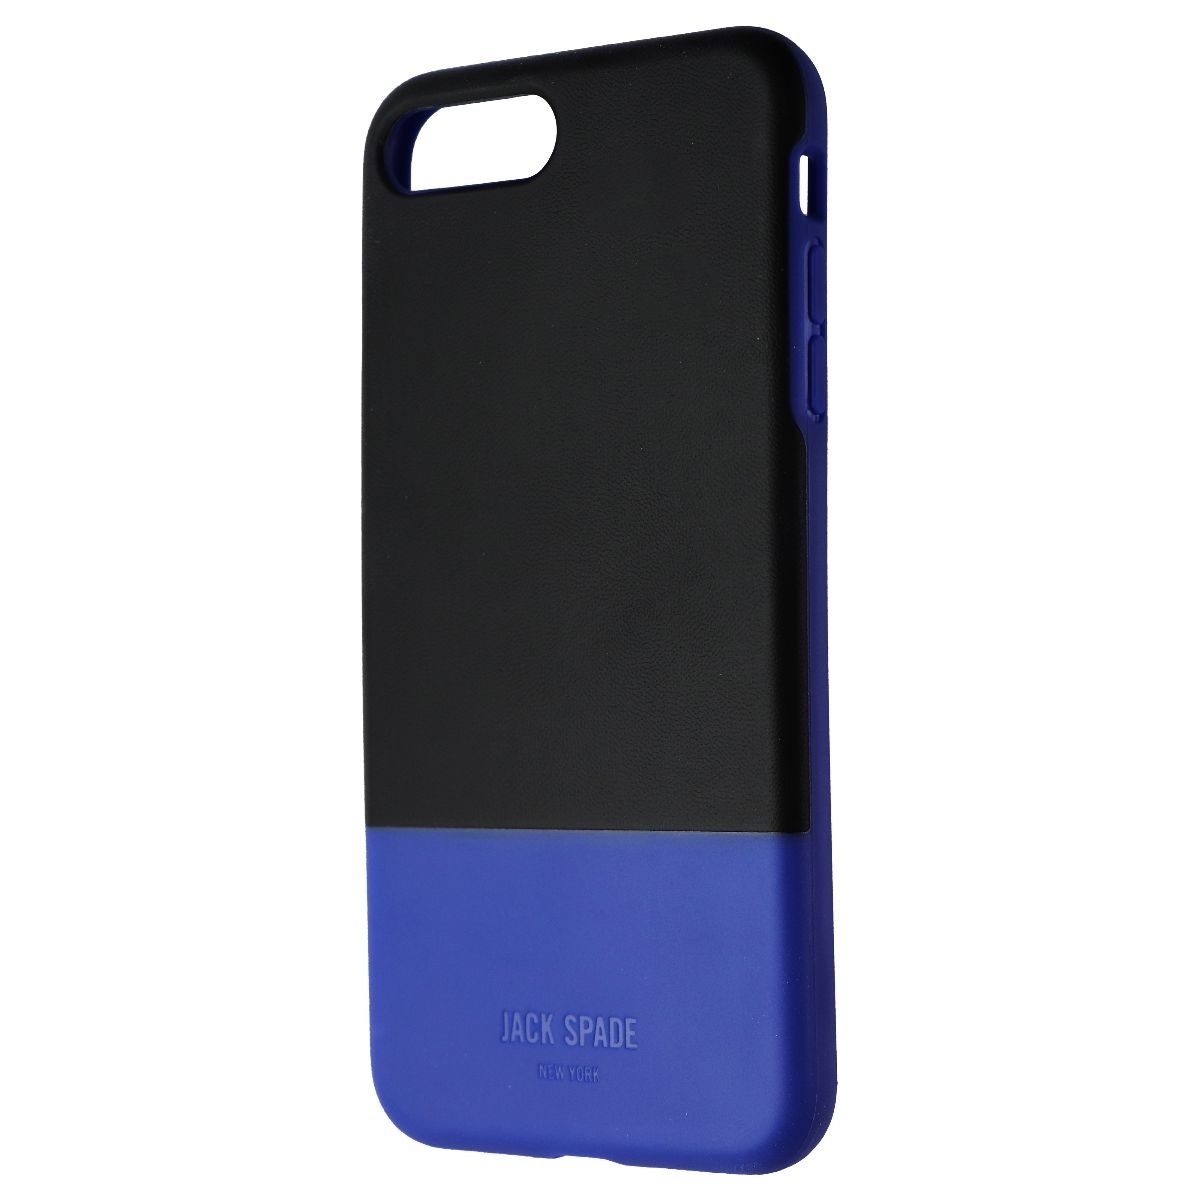 Jake Spade Color-Block Series Case For Apple IPhone 8 Plus/7 Plus - Black/Blue (Refurbished)